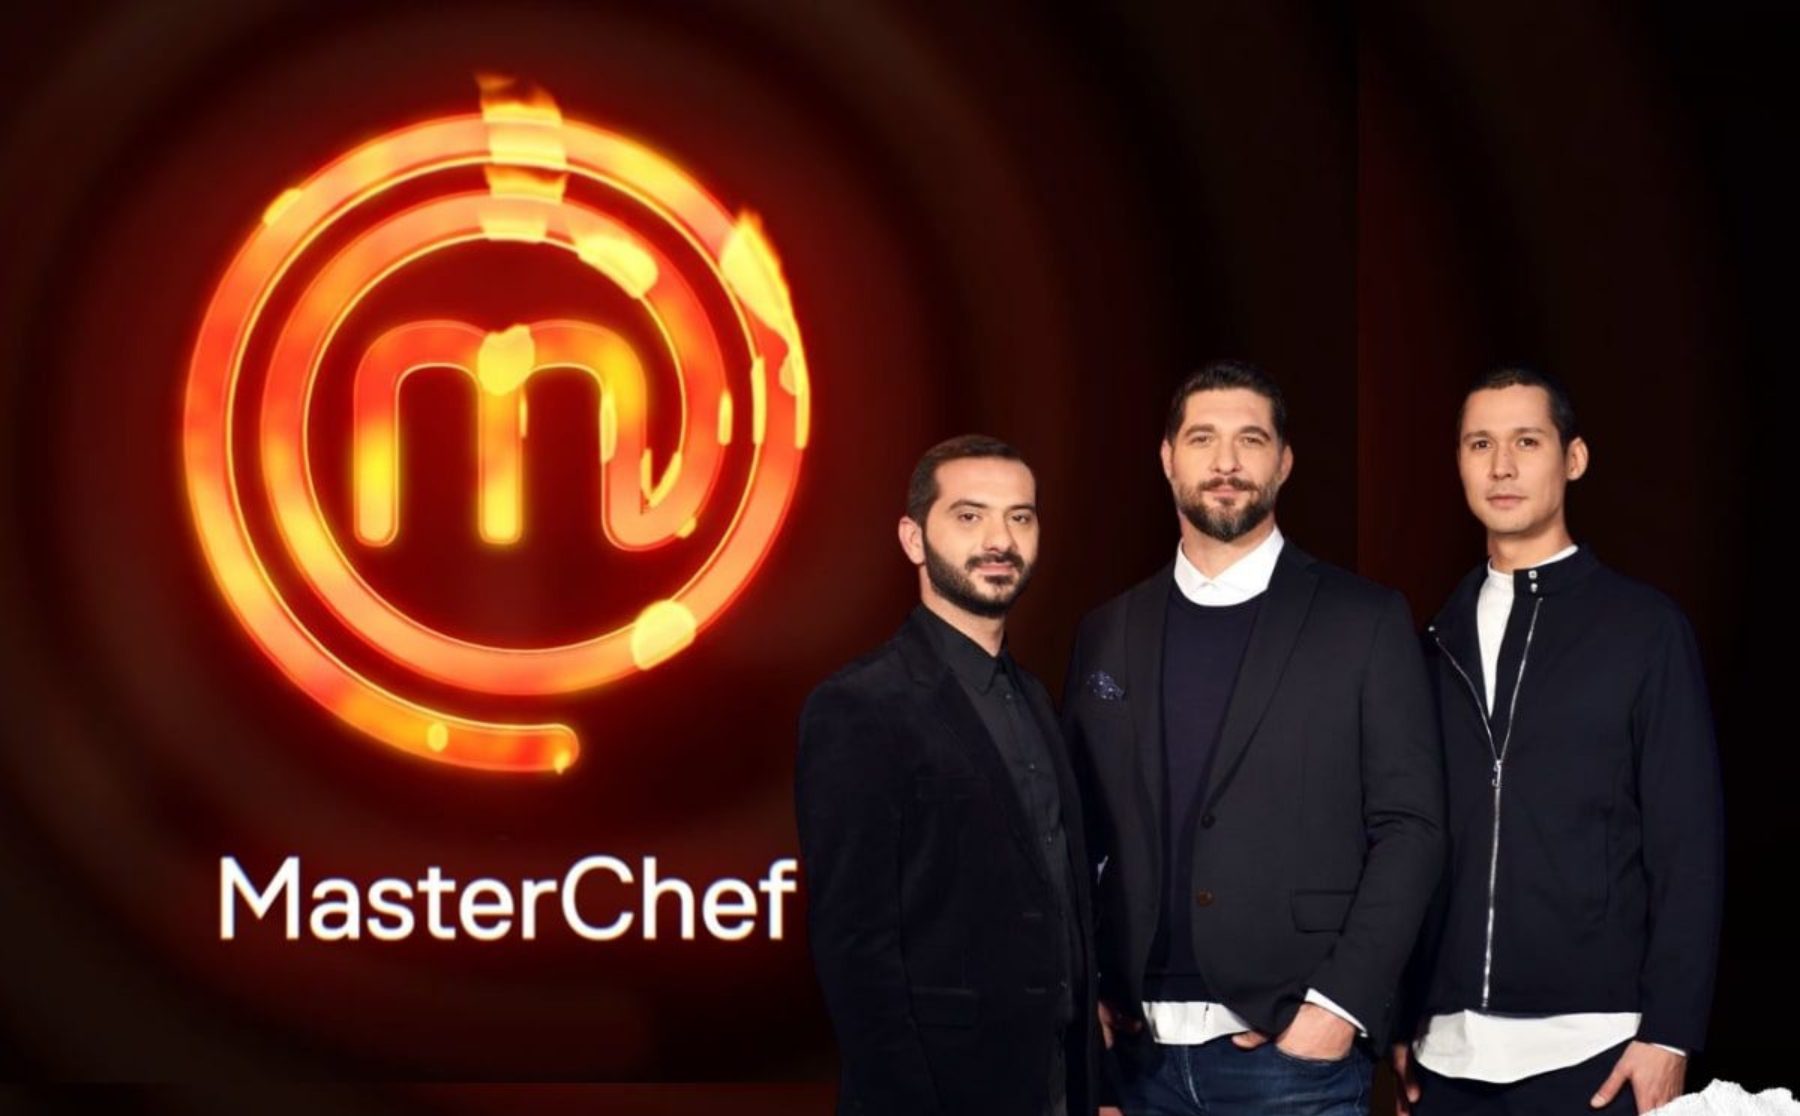 MasterChef 2022: Οι 3 κριτές σε αναζήτηση του επόμενου Master Chef της Ελλάδας [trailer]